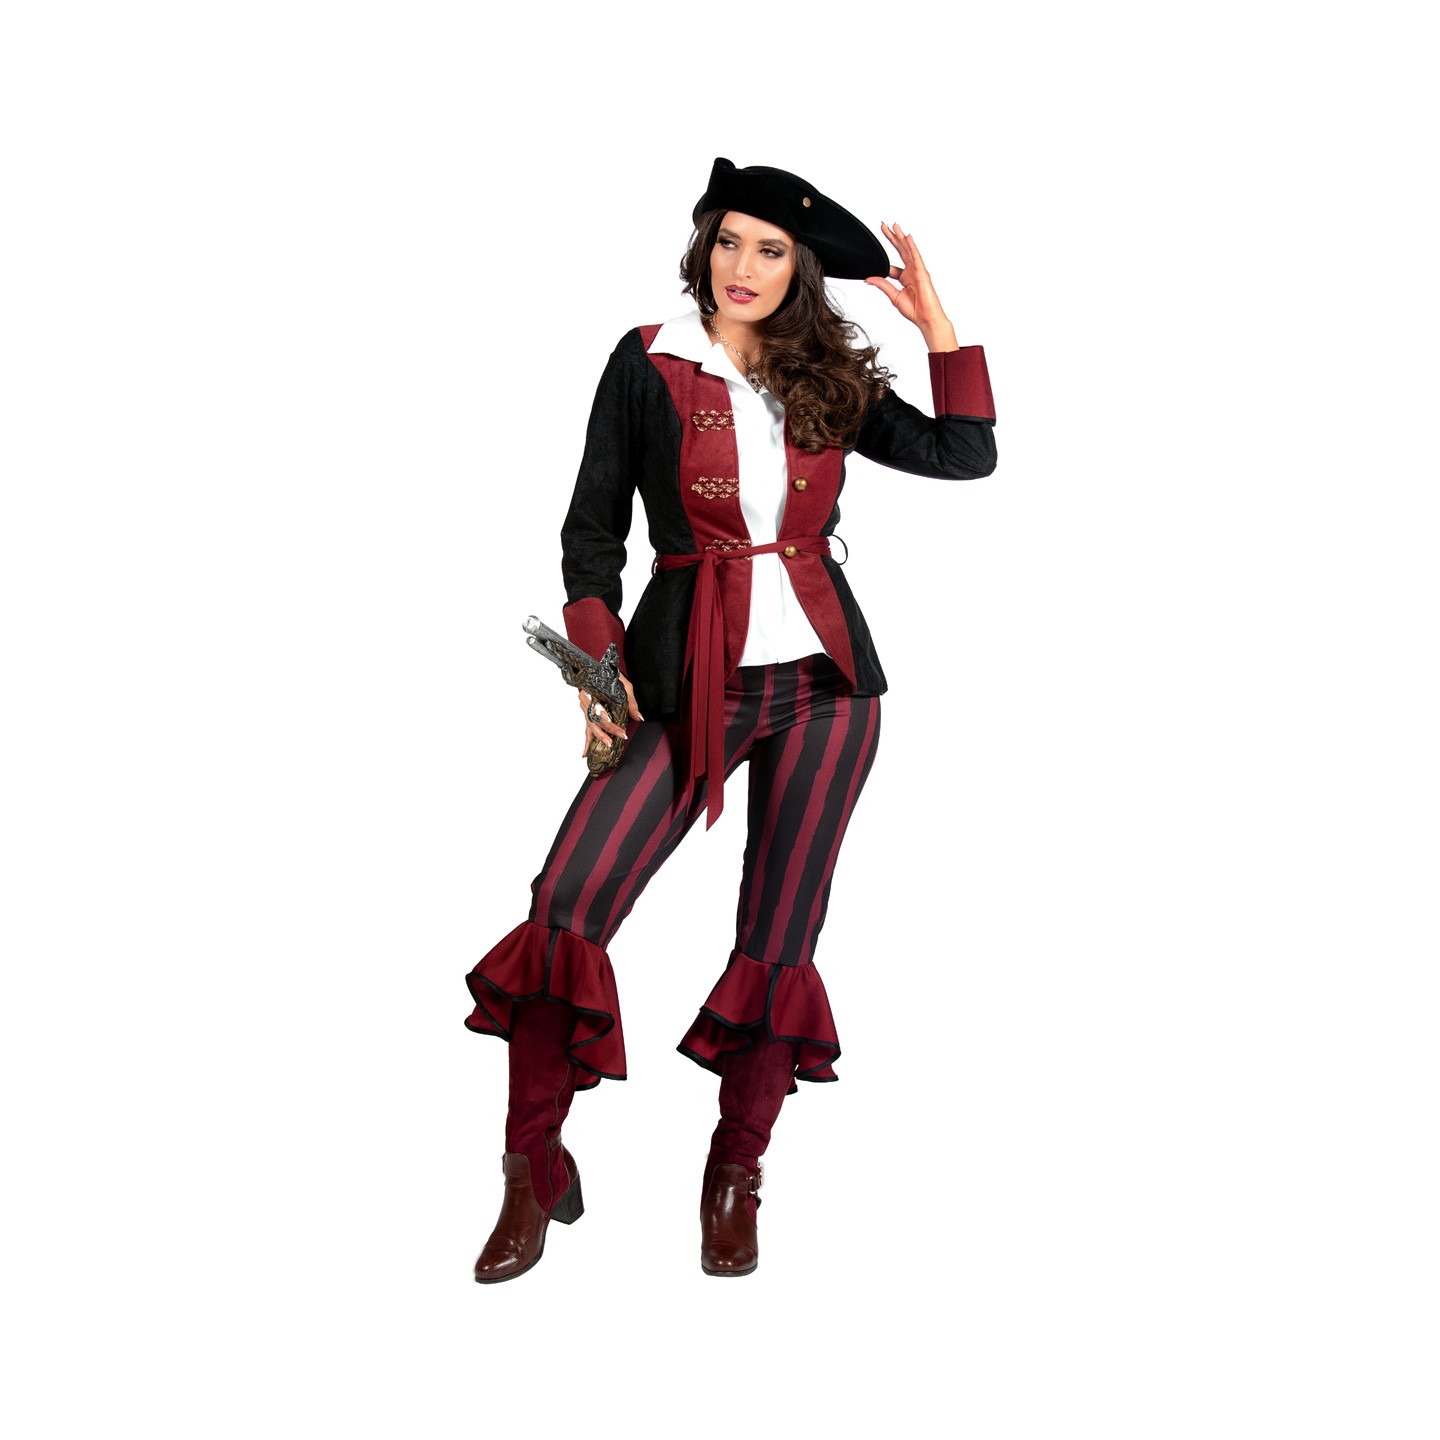 piratenpak volwassenen piraat kostuum dames outfit